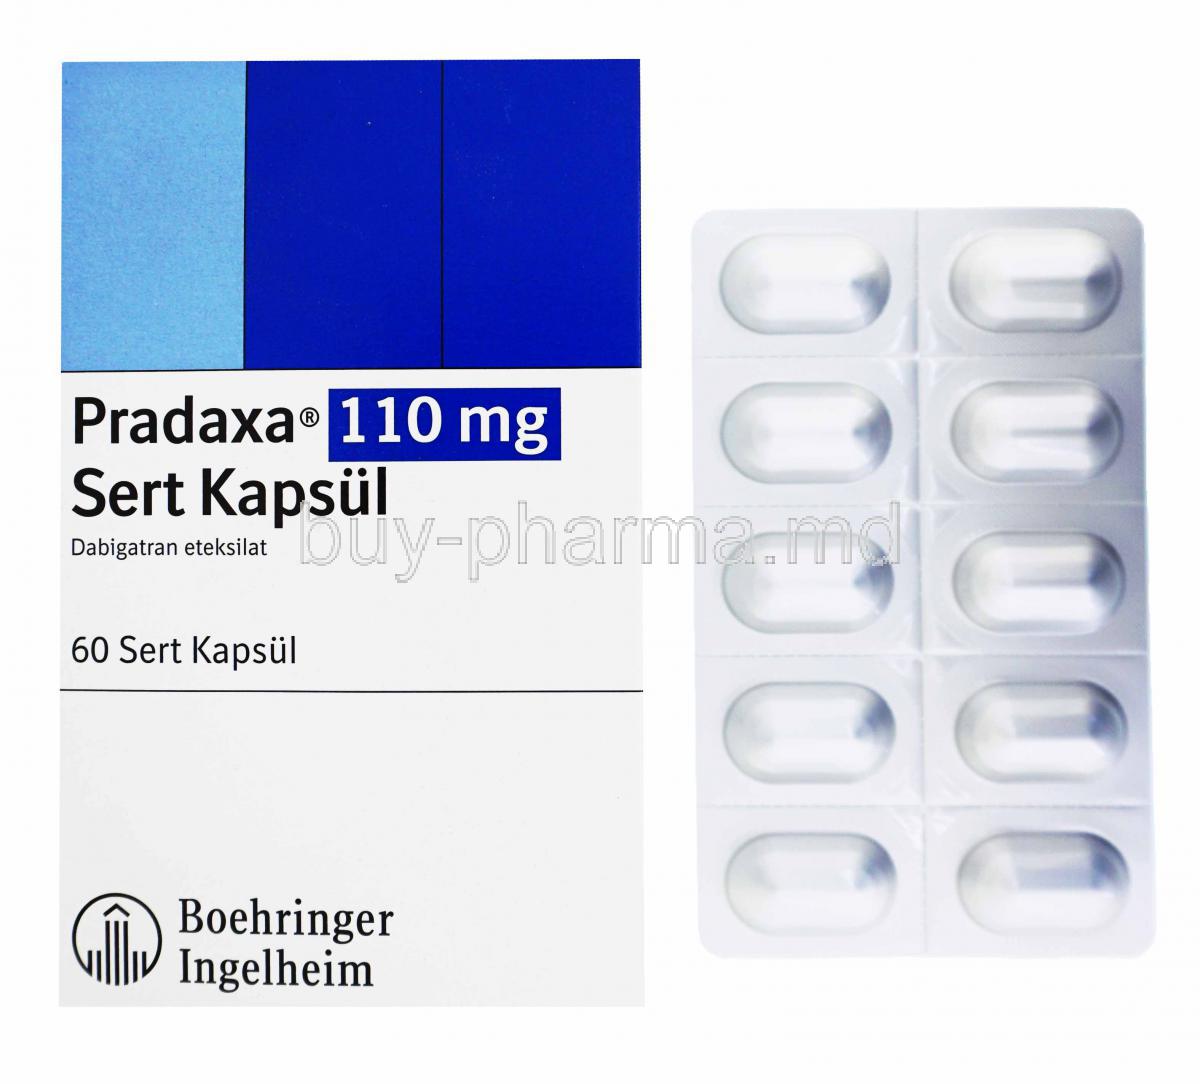 Dabigatran capsule, box and blister pack presentation, 110 mg 60 caps